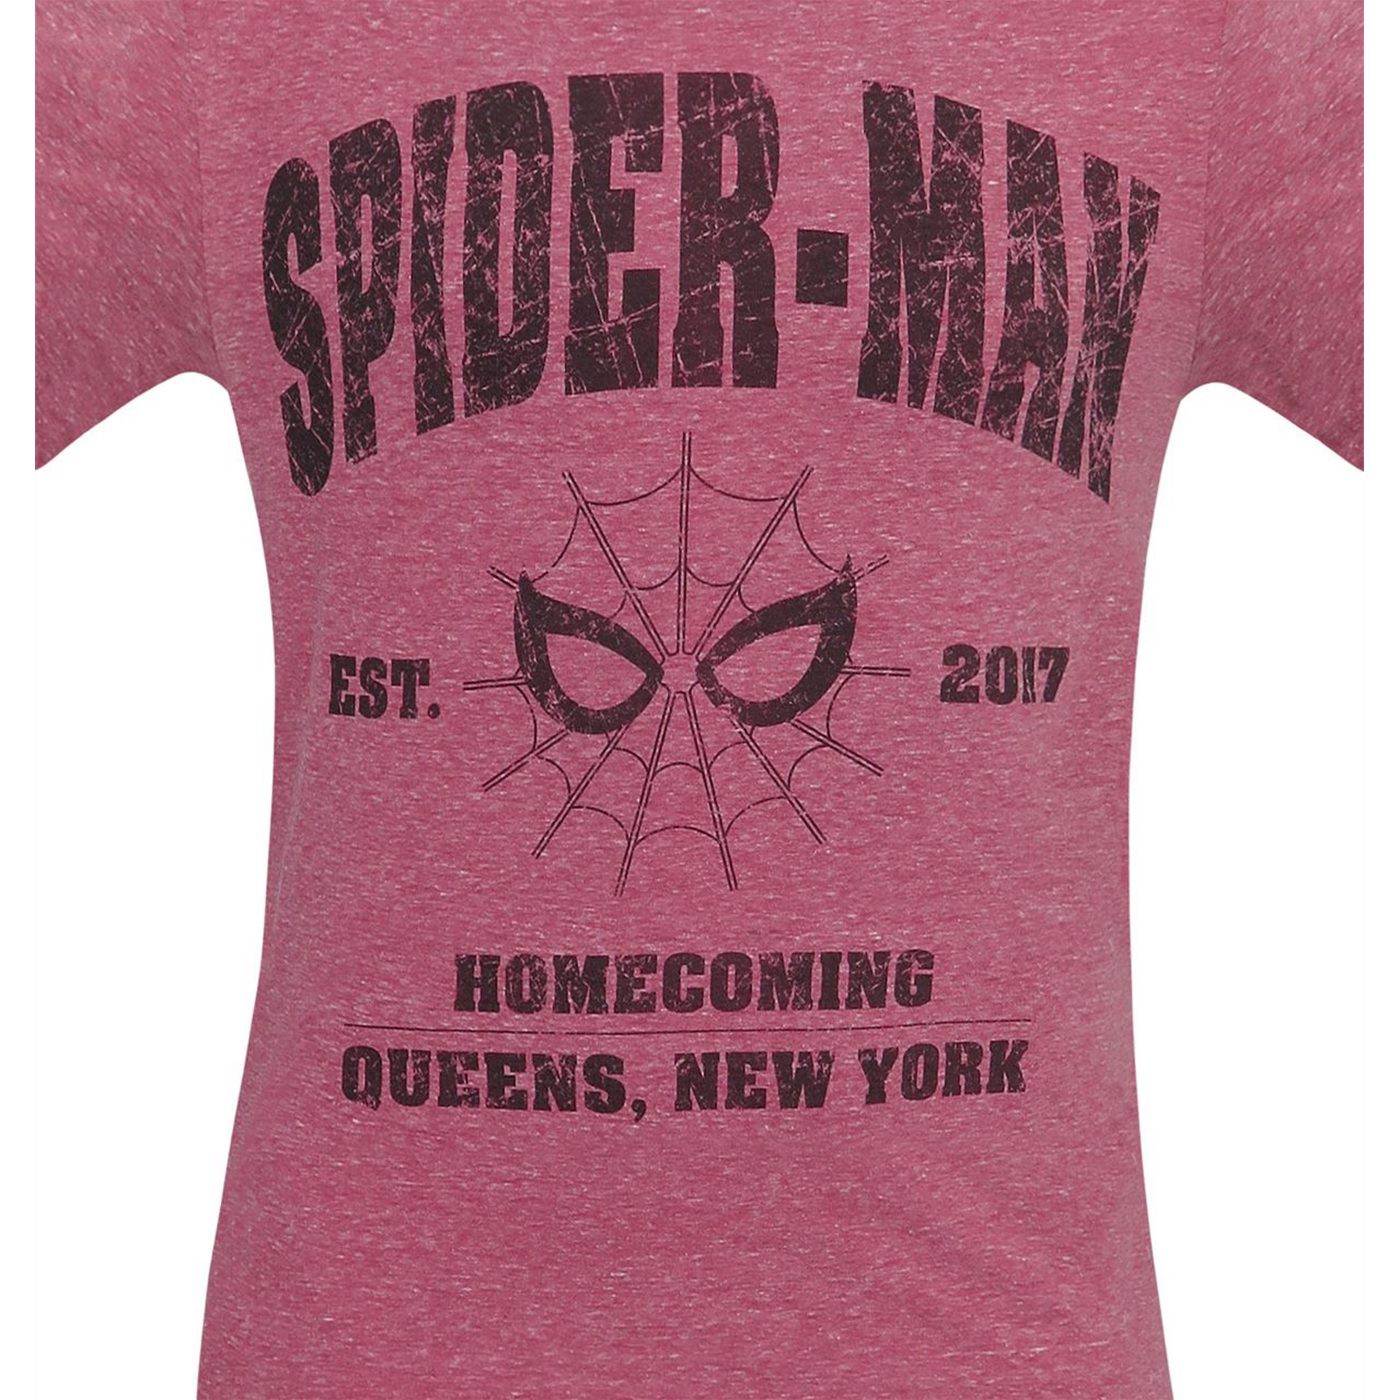 Spider-Man Homecoming Queens New York Men's T-Shirt